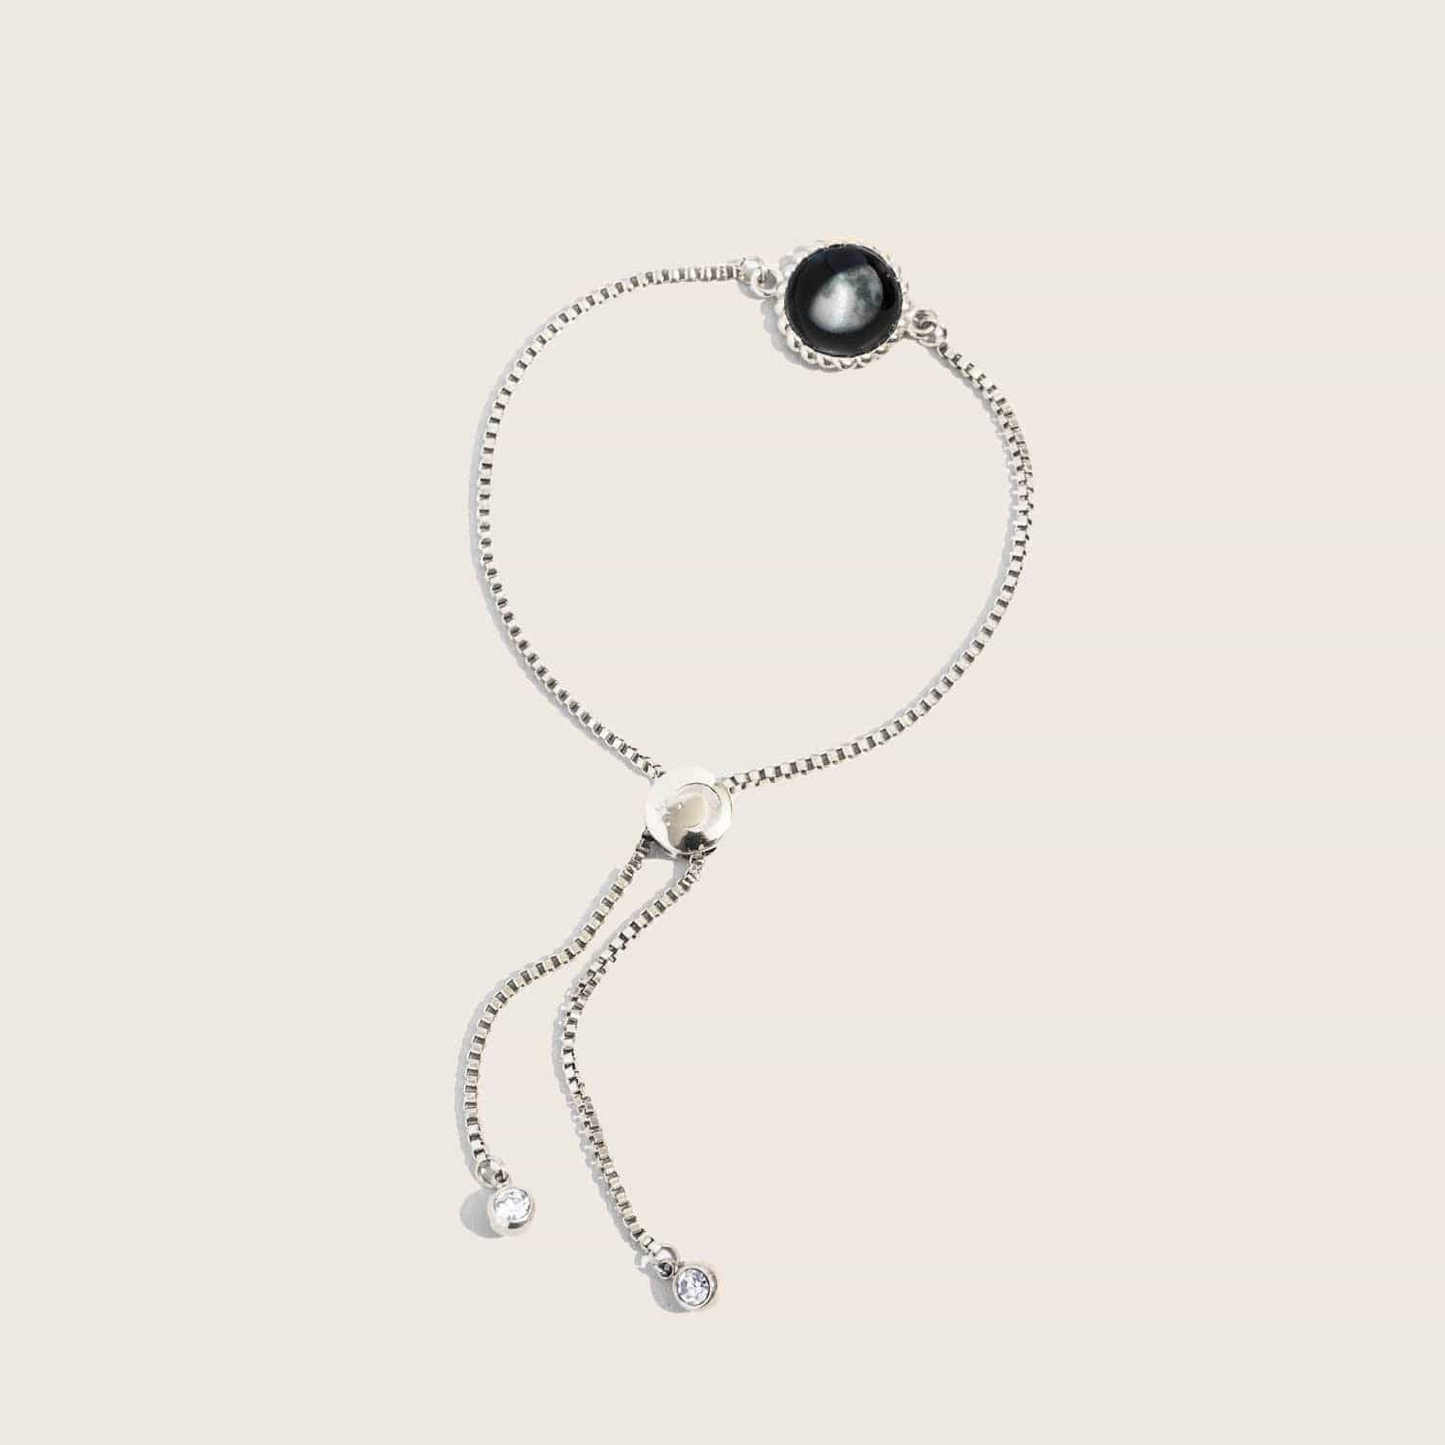 Moonglow Carina Twist Bracelet in Stainless Steel - Mellow Monkey